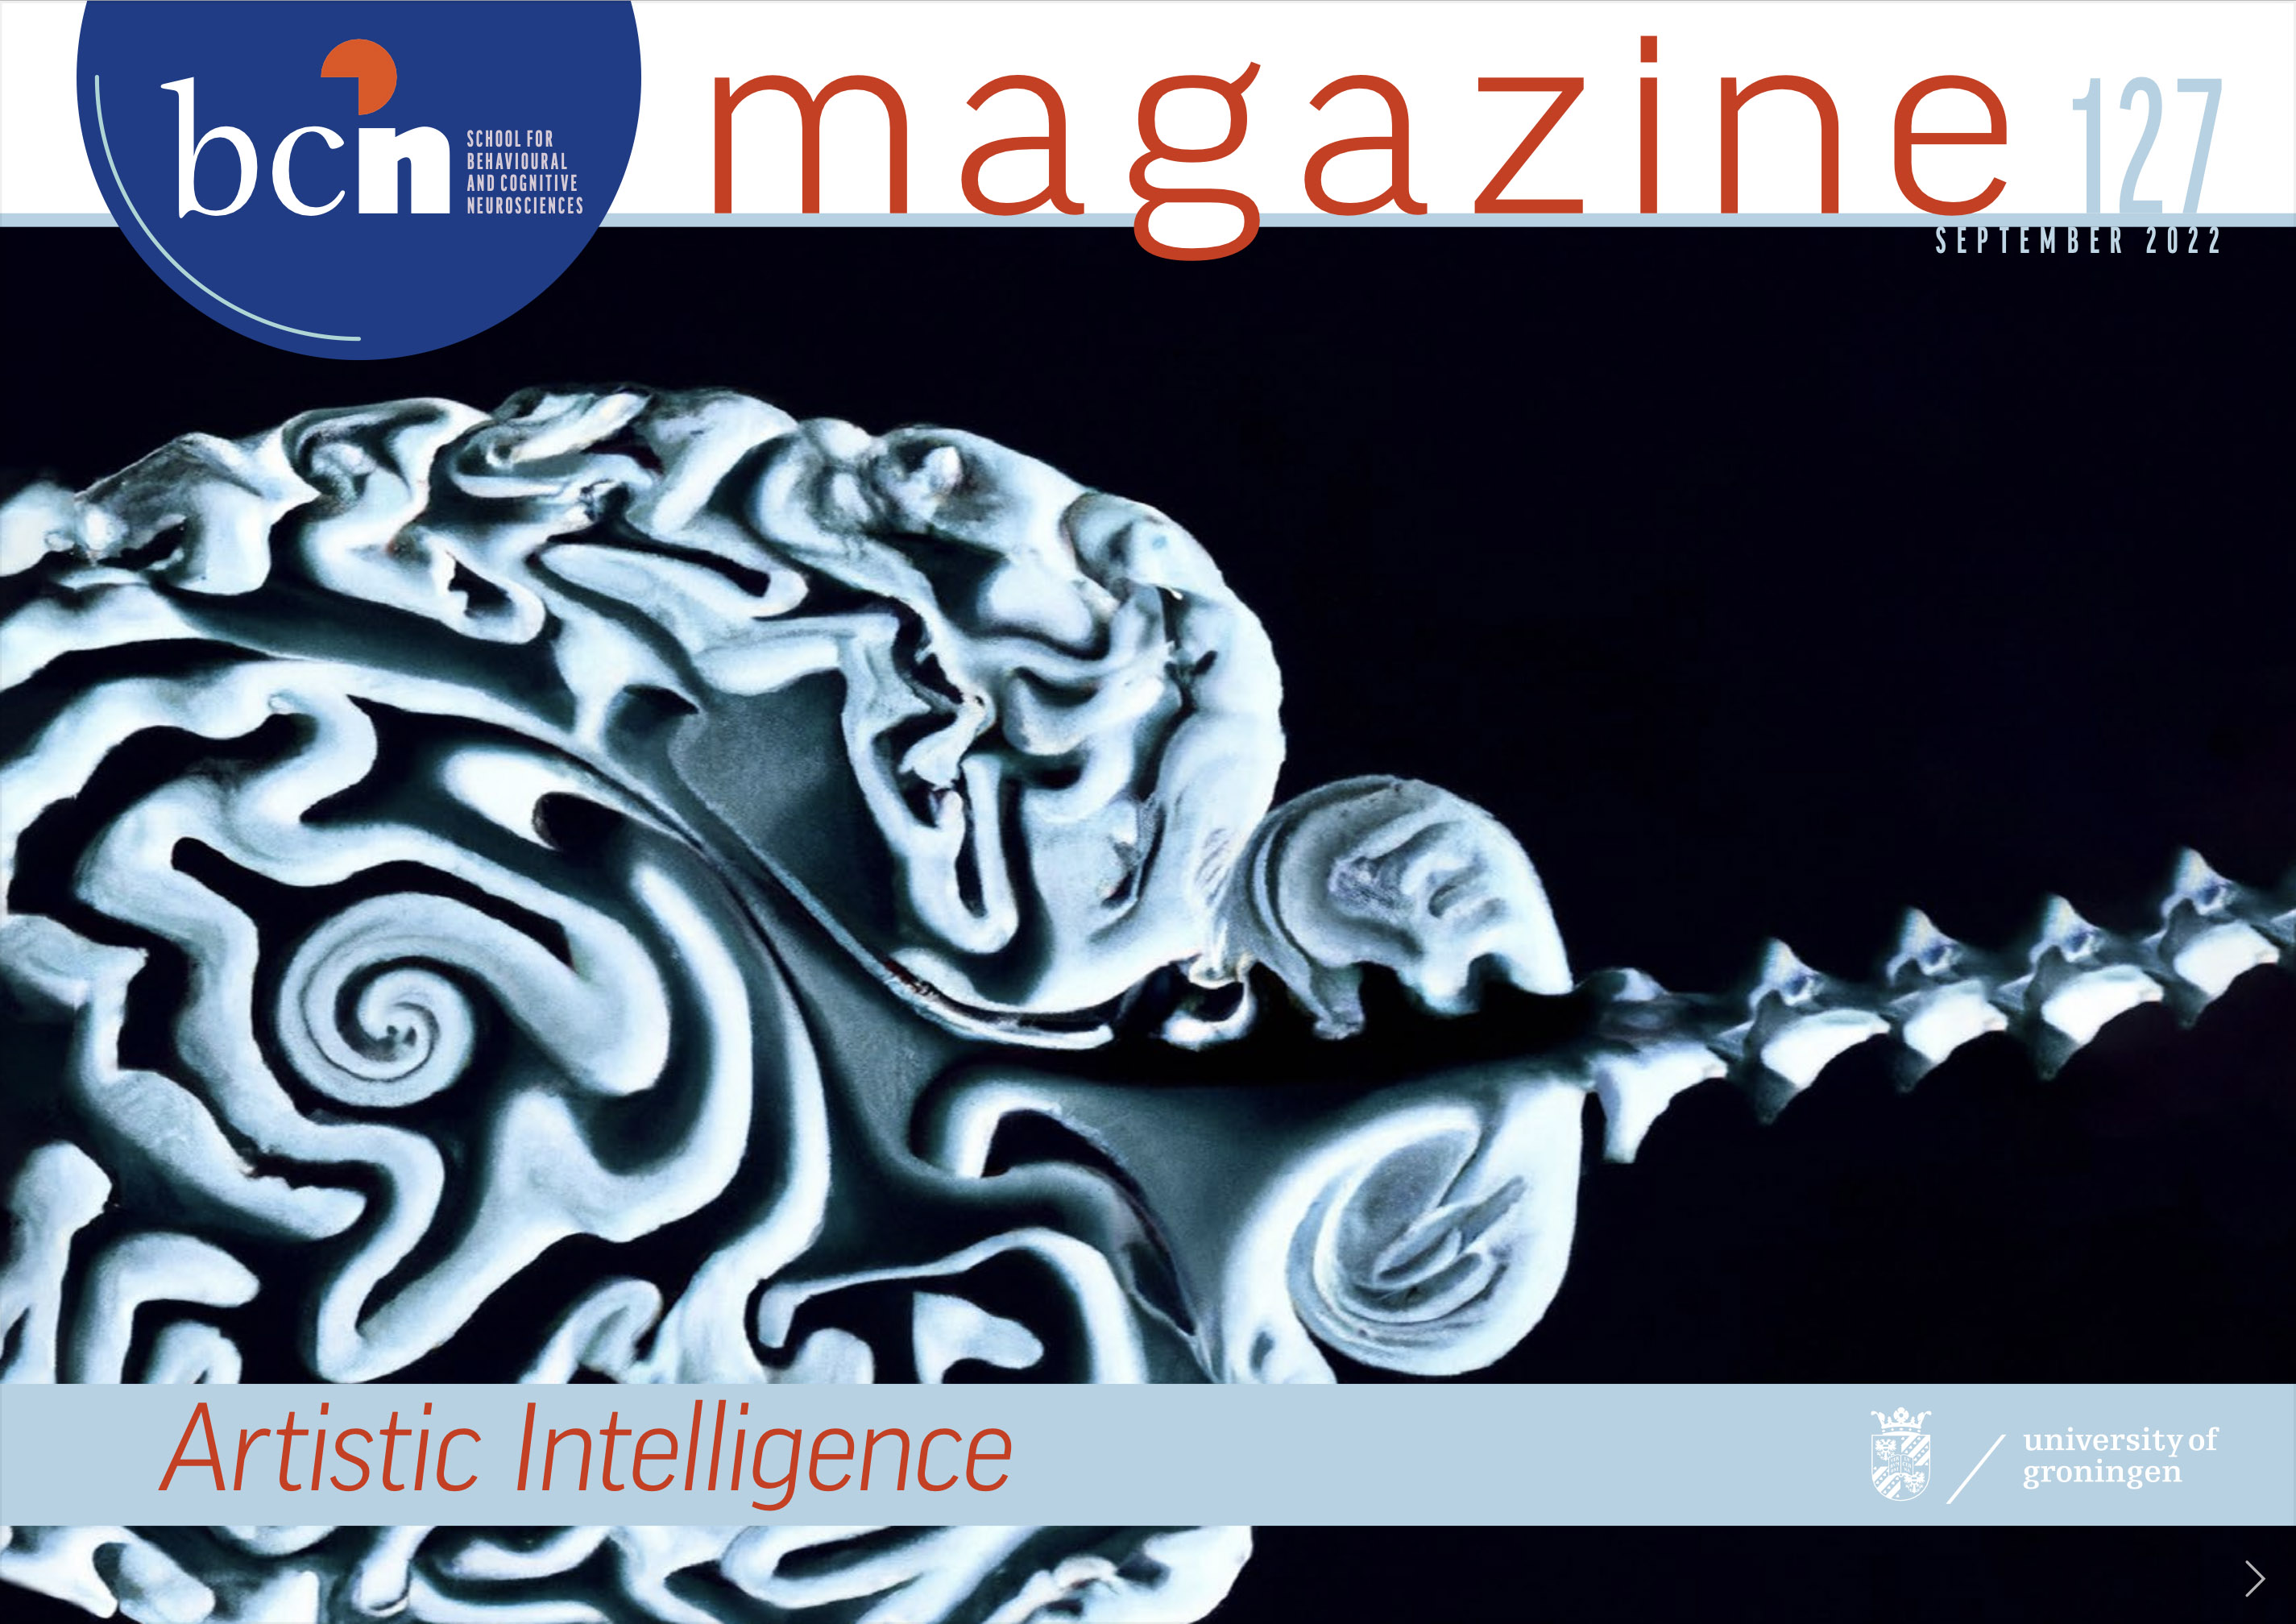 BCN Magazine | News | University of Groningen